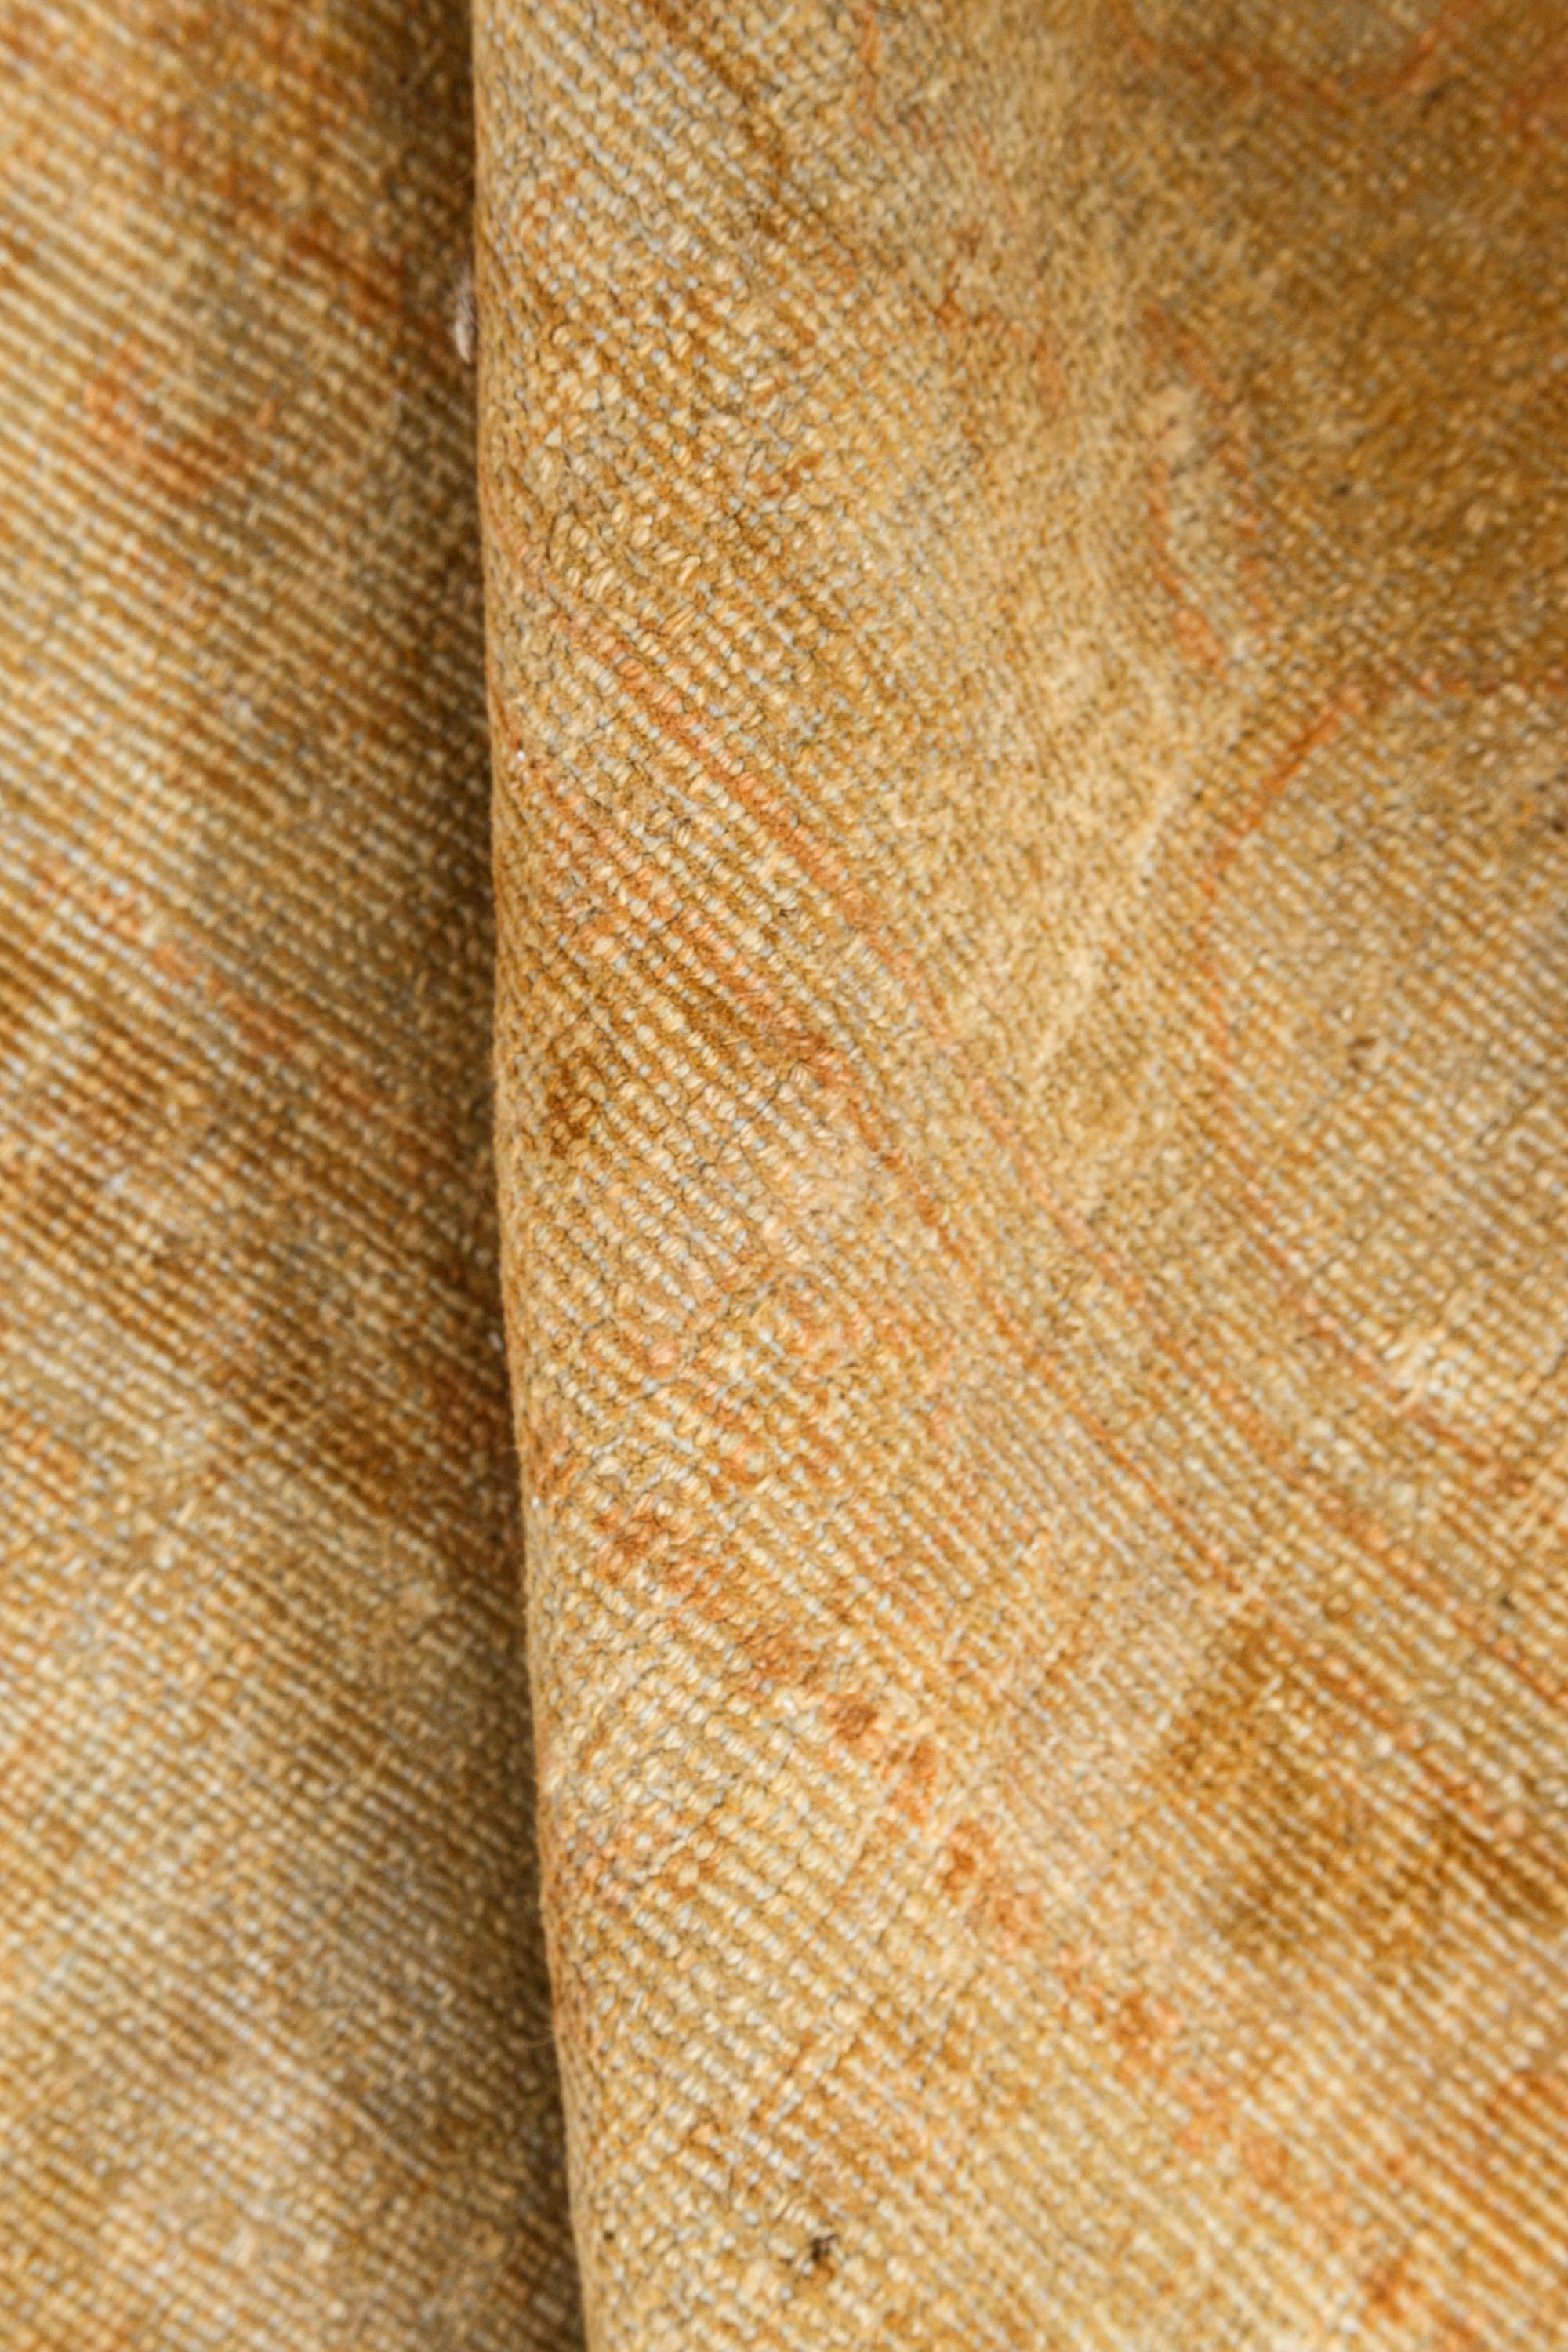 Early 20th century Indian Amritsar handmade wool rug.
Size: 12'0